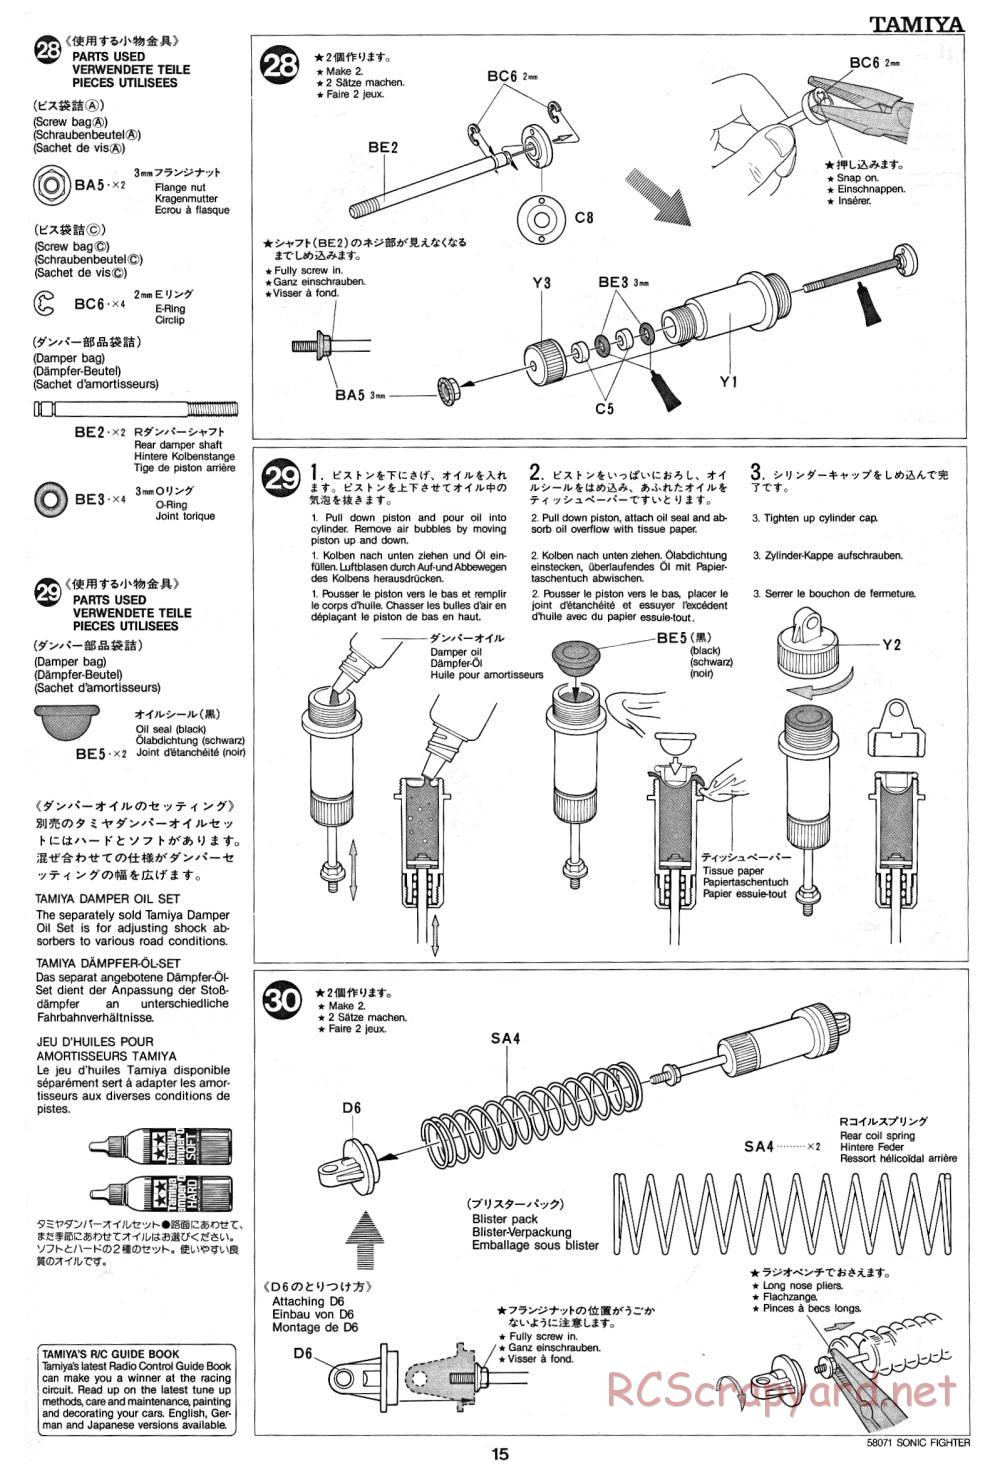 Tamiya - Sonic Fighter - 58071 - Manual - Page 15